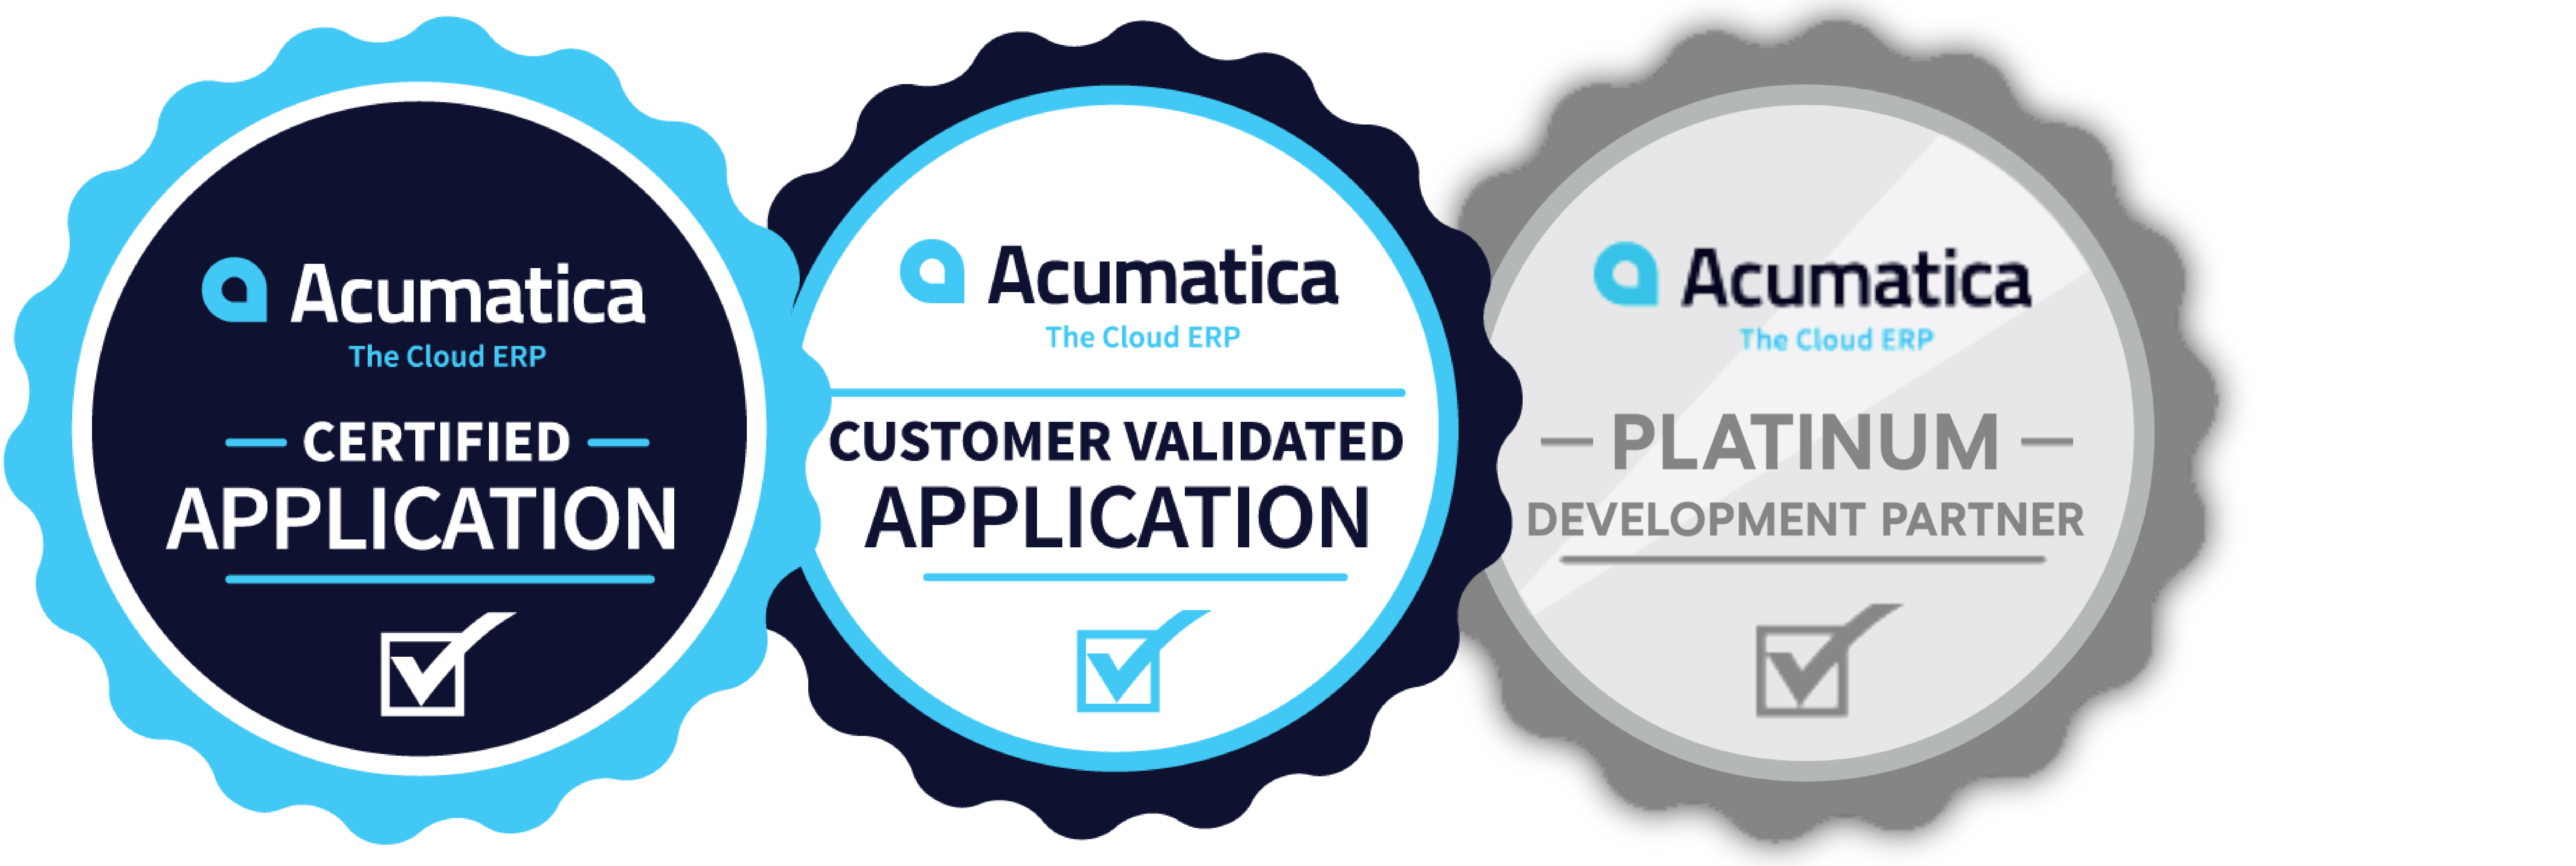 Acumatica Certifications 